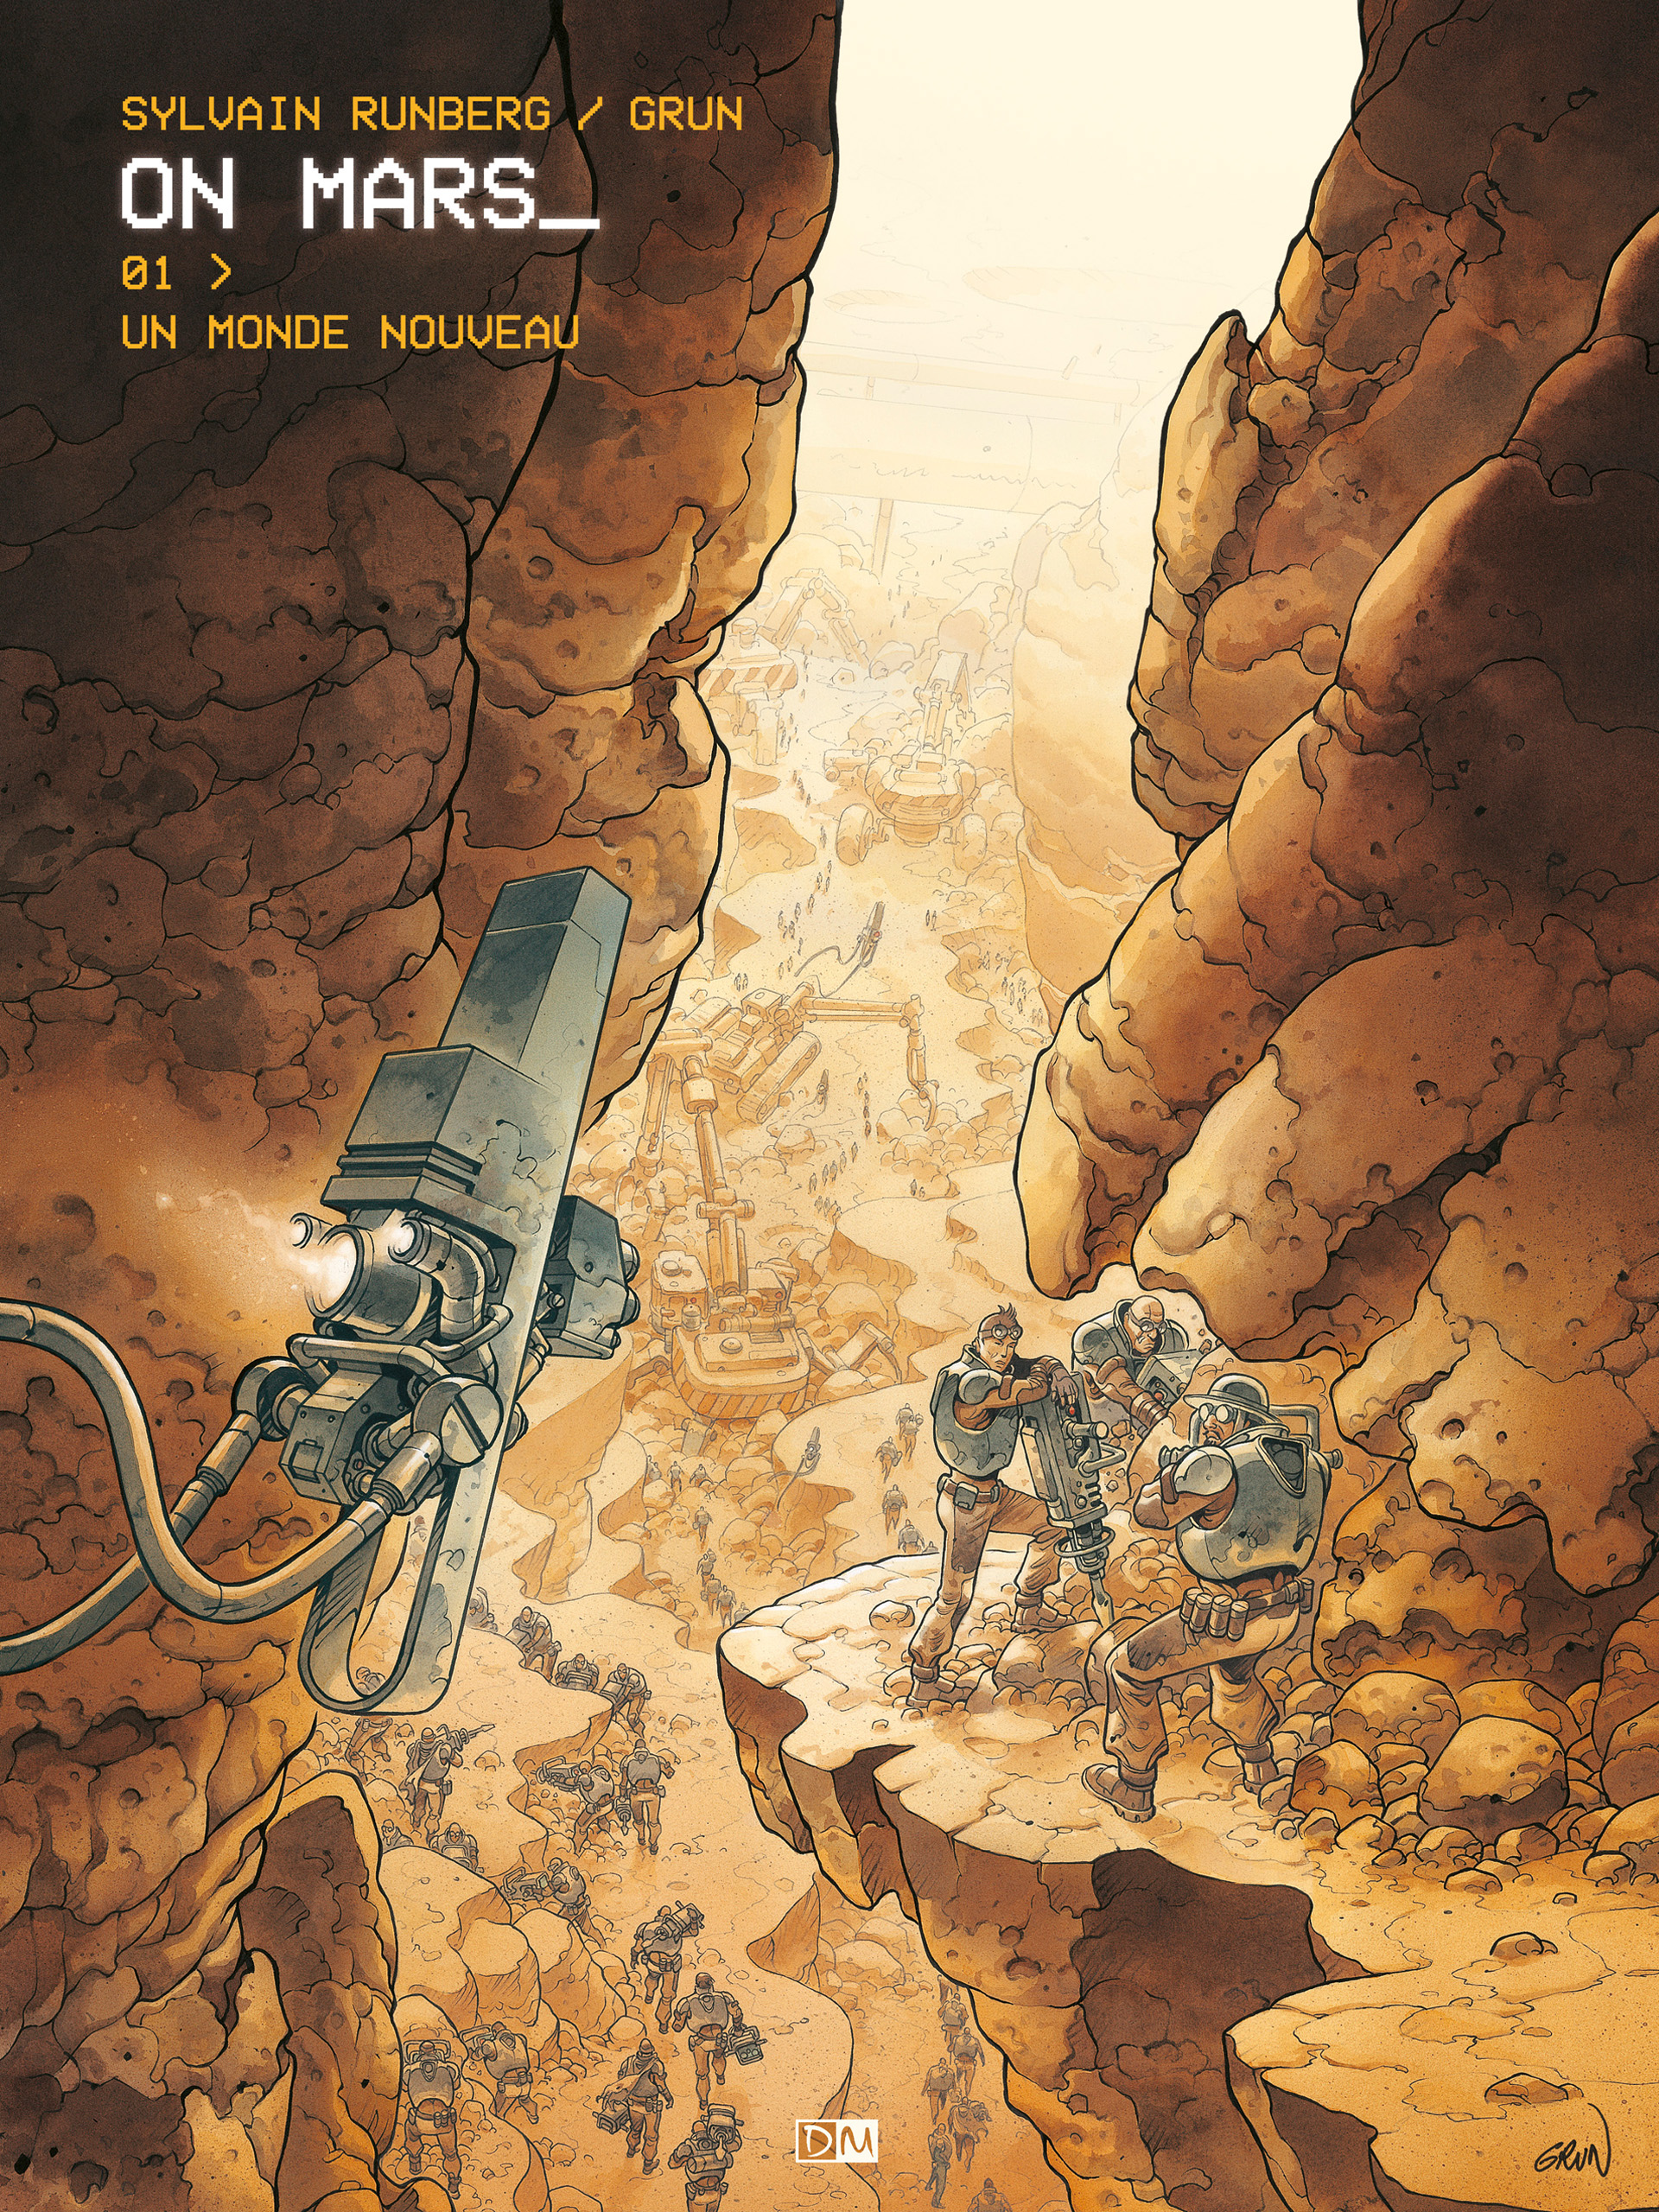 Un Monde nouveau - On Mars - Sylvain Runberg - Grun - Couverture